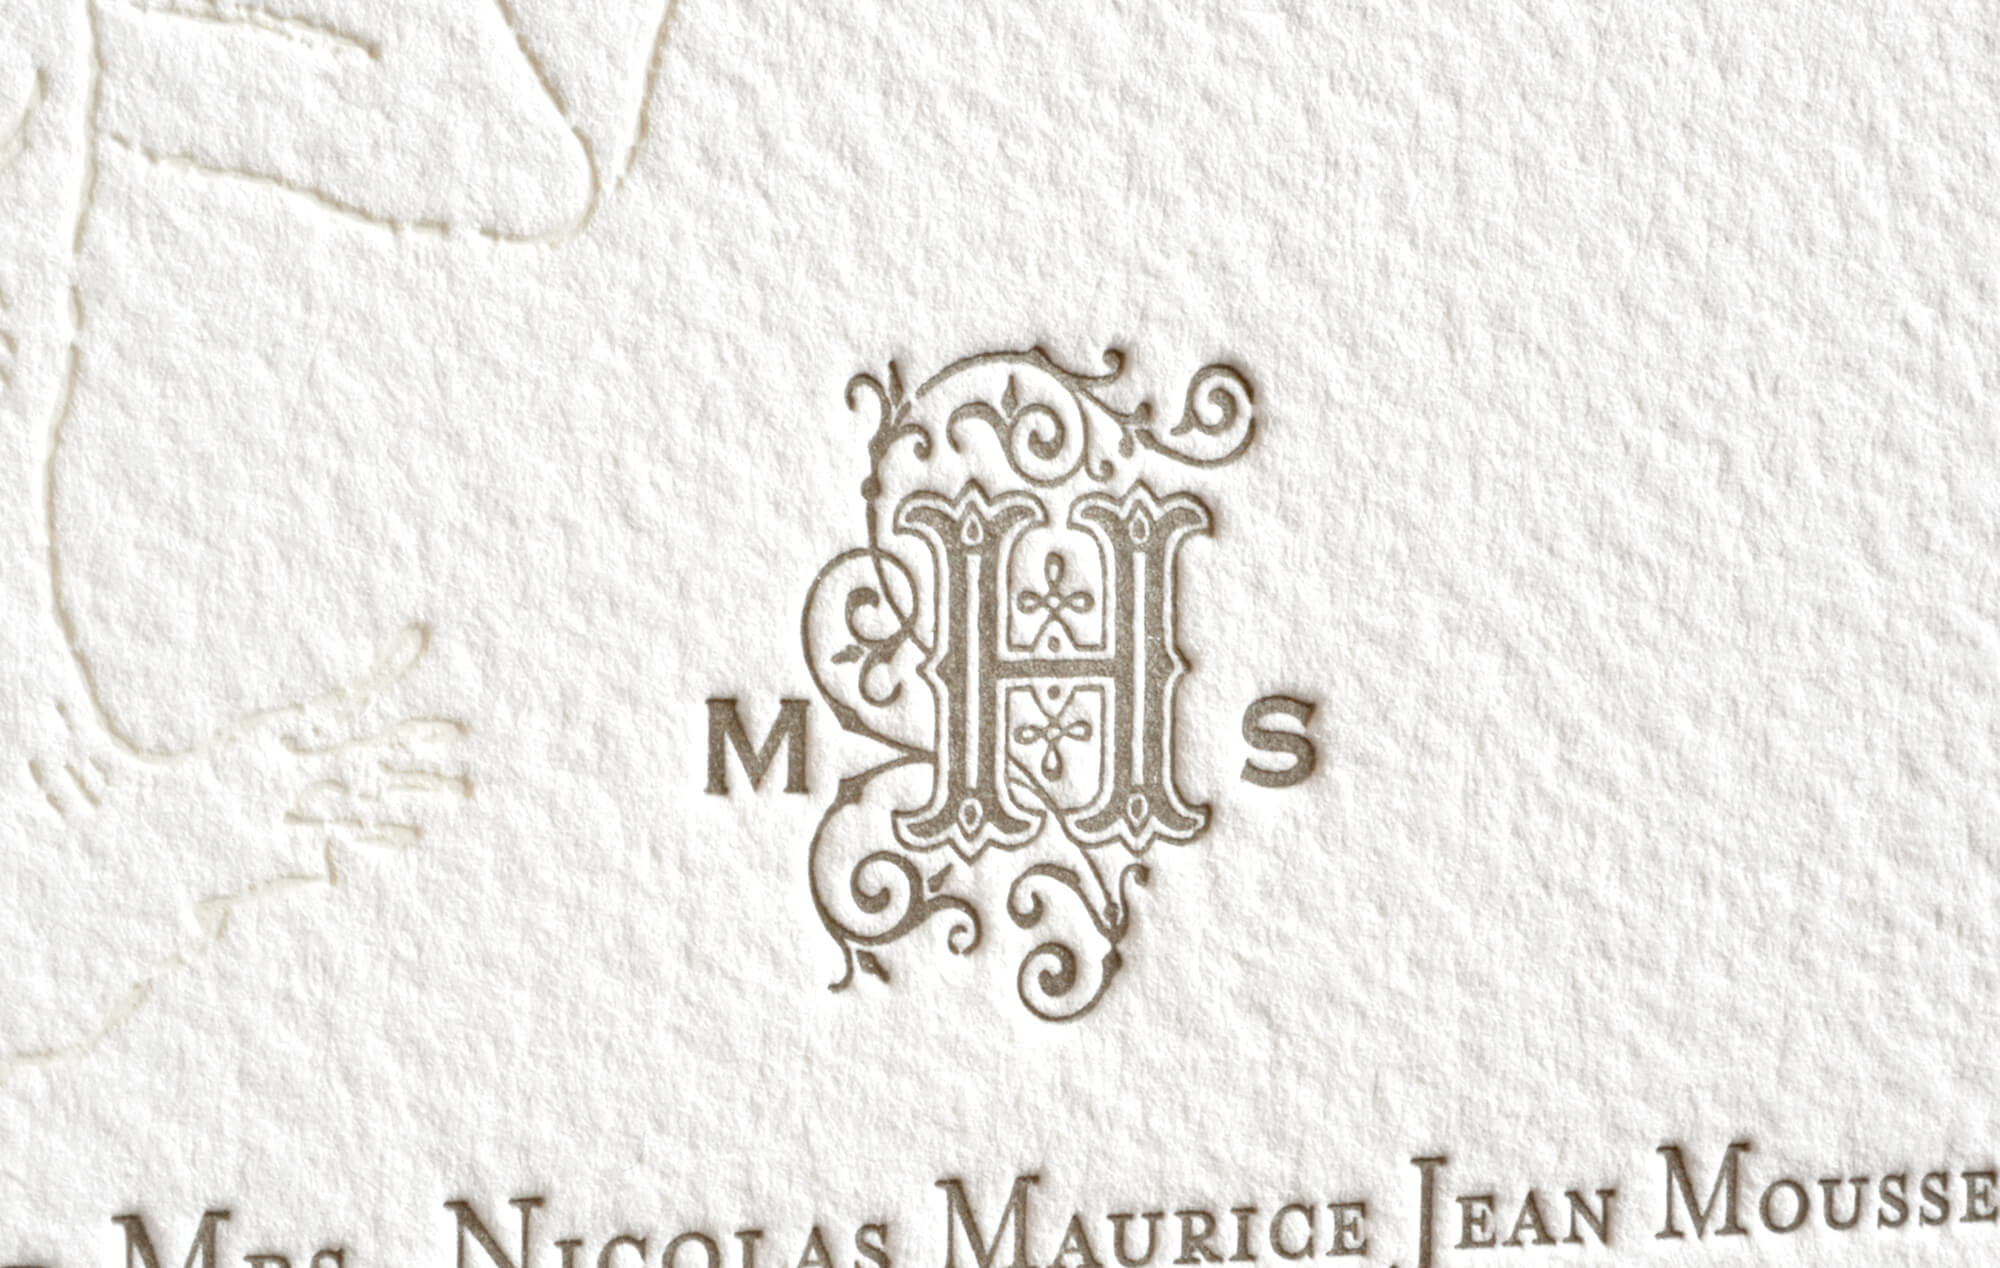 Letterpress vintage inspired monogram